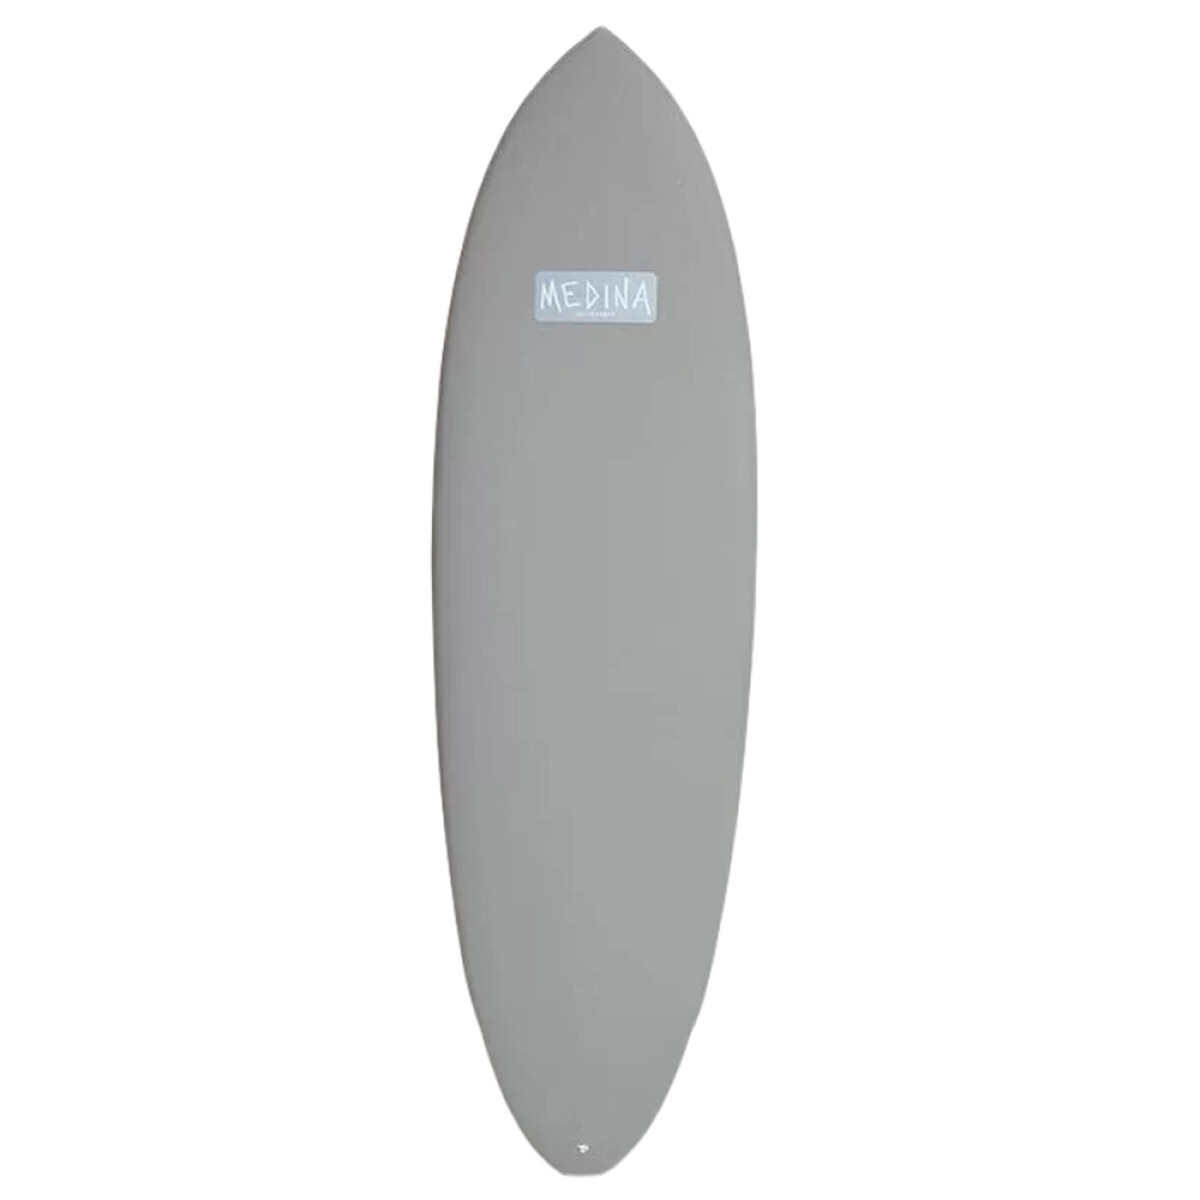 Tabla de surf Medina Softboards 6'4 Old News - Fcs2 